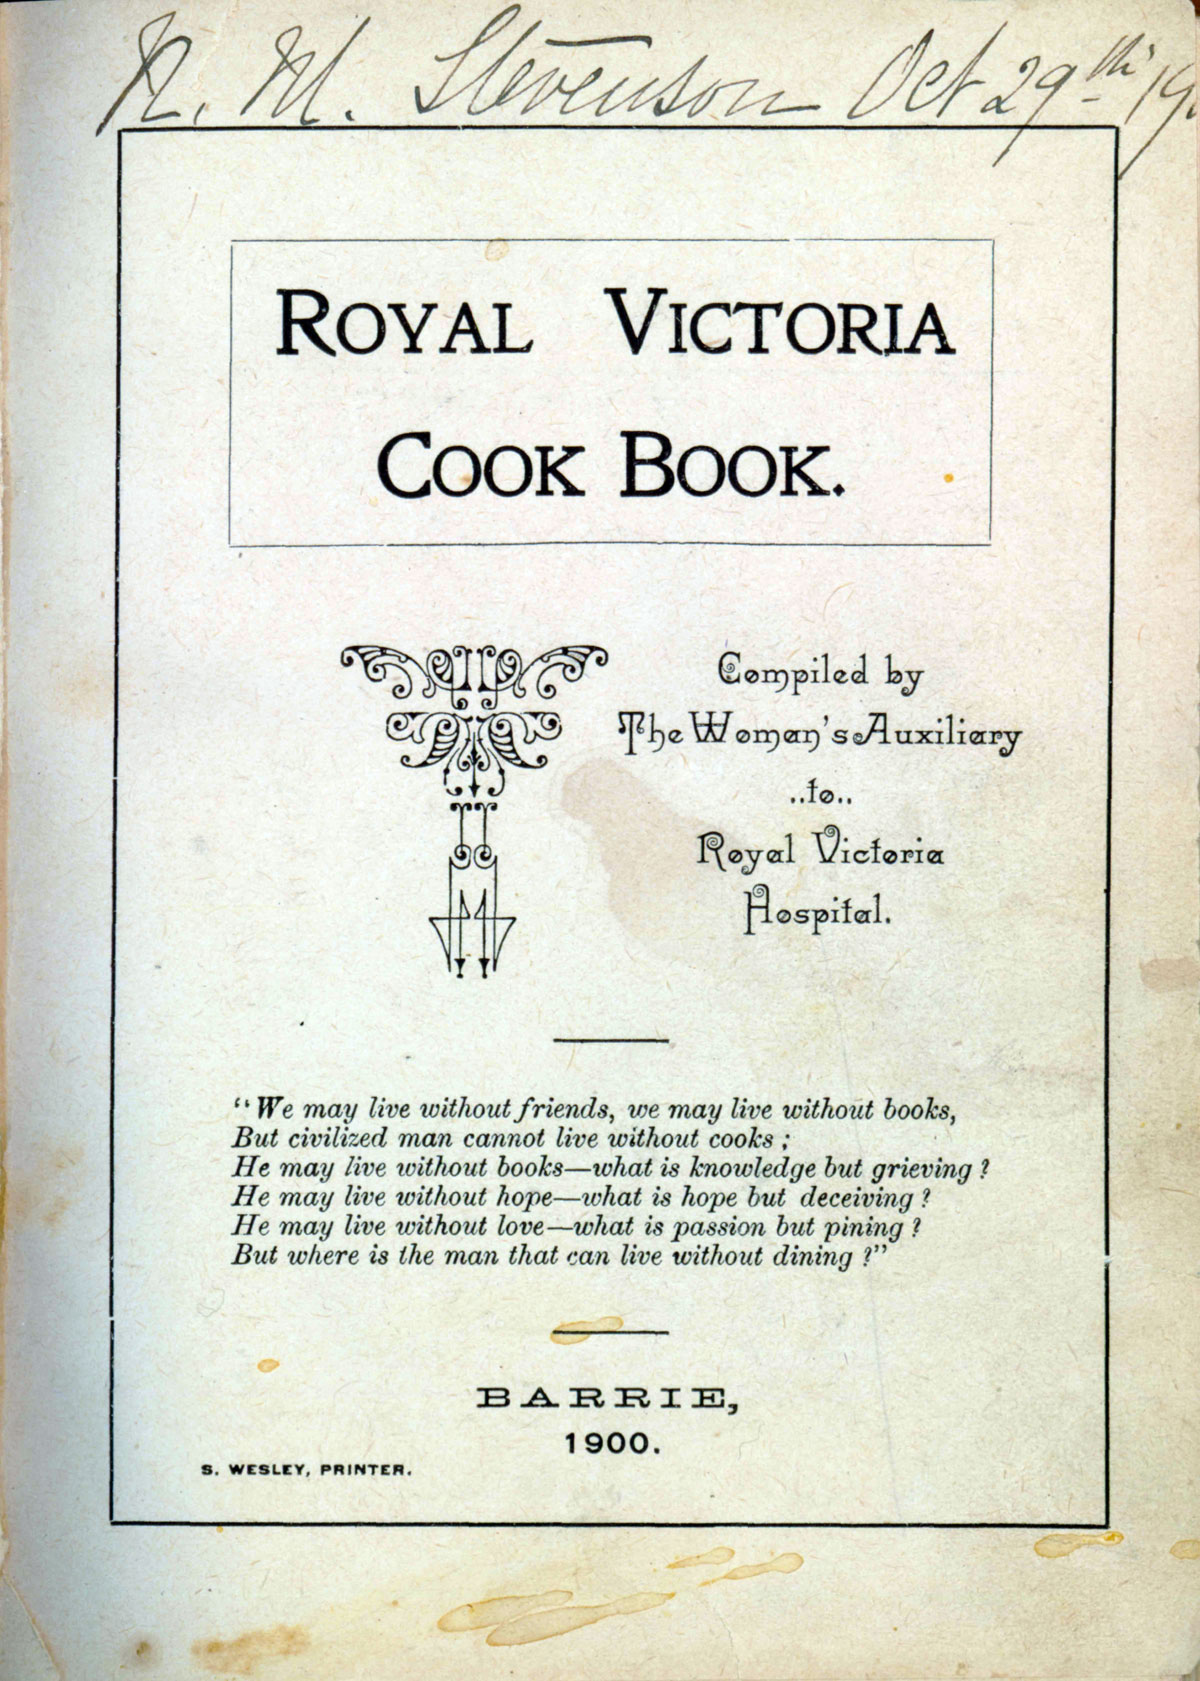 Royal Victoria Cook Book